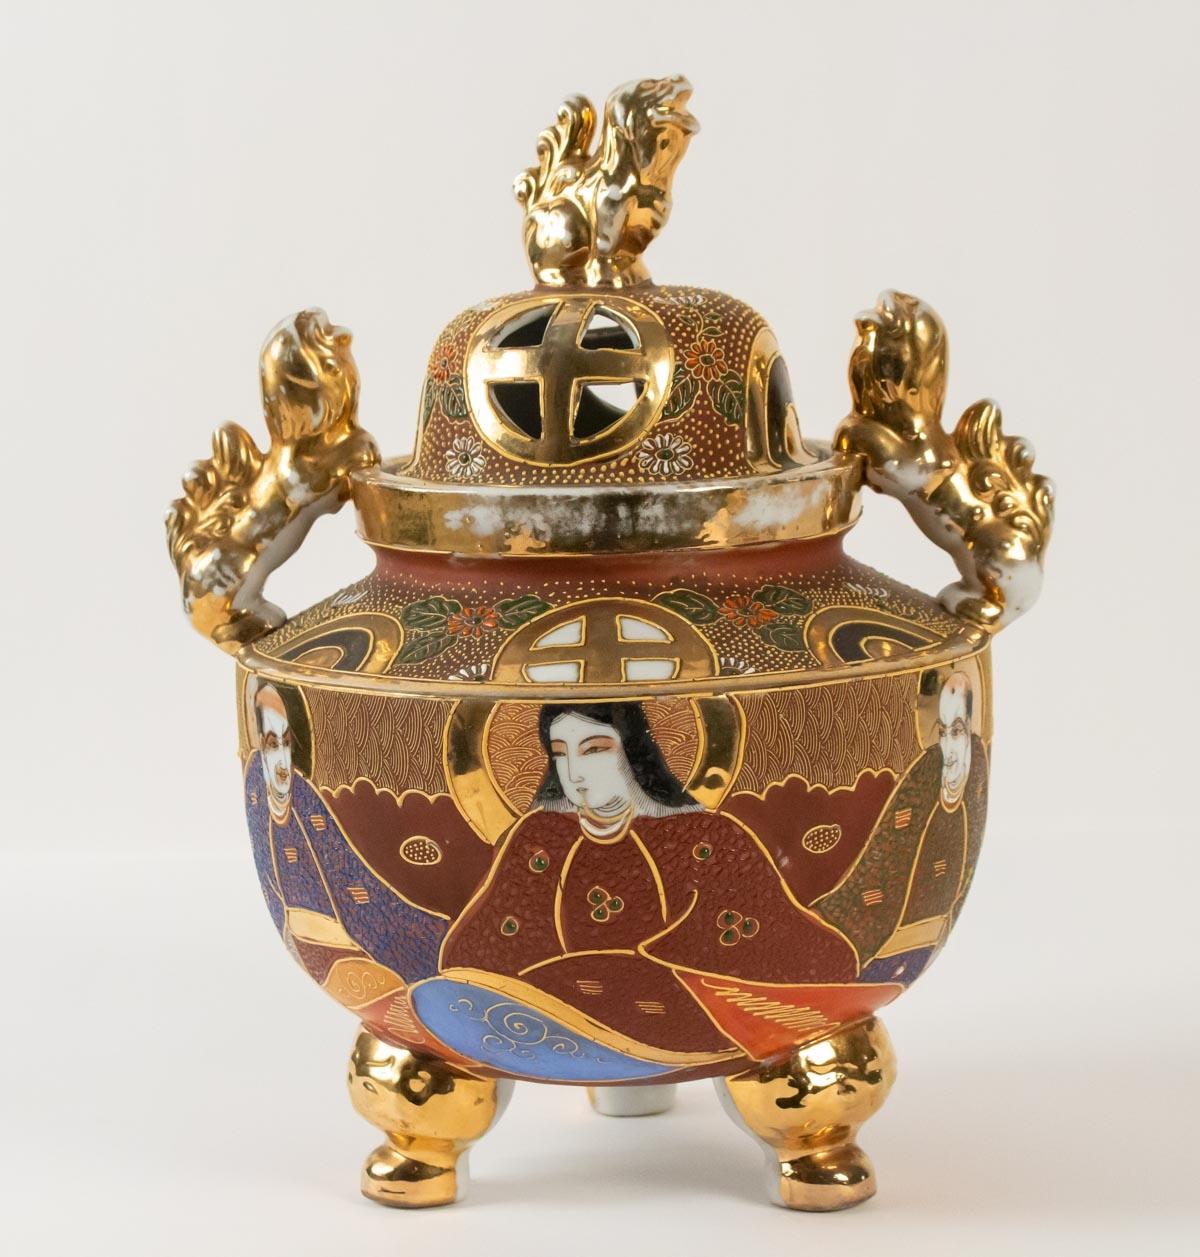 Satsuma-Yaki Japan Grand Burner-Perfume Porcelain from the Meiji Era (1868-1912).

Measures: H 34cm, W 28cm, D 25cm.